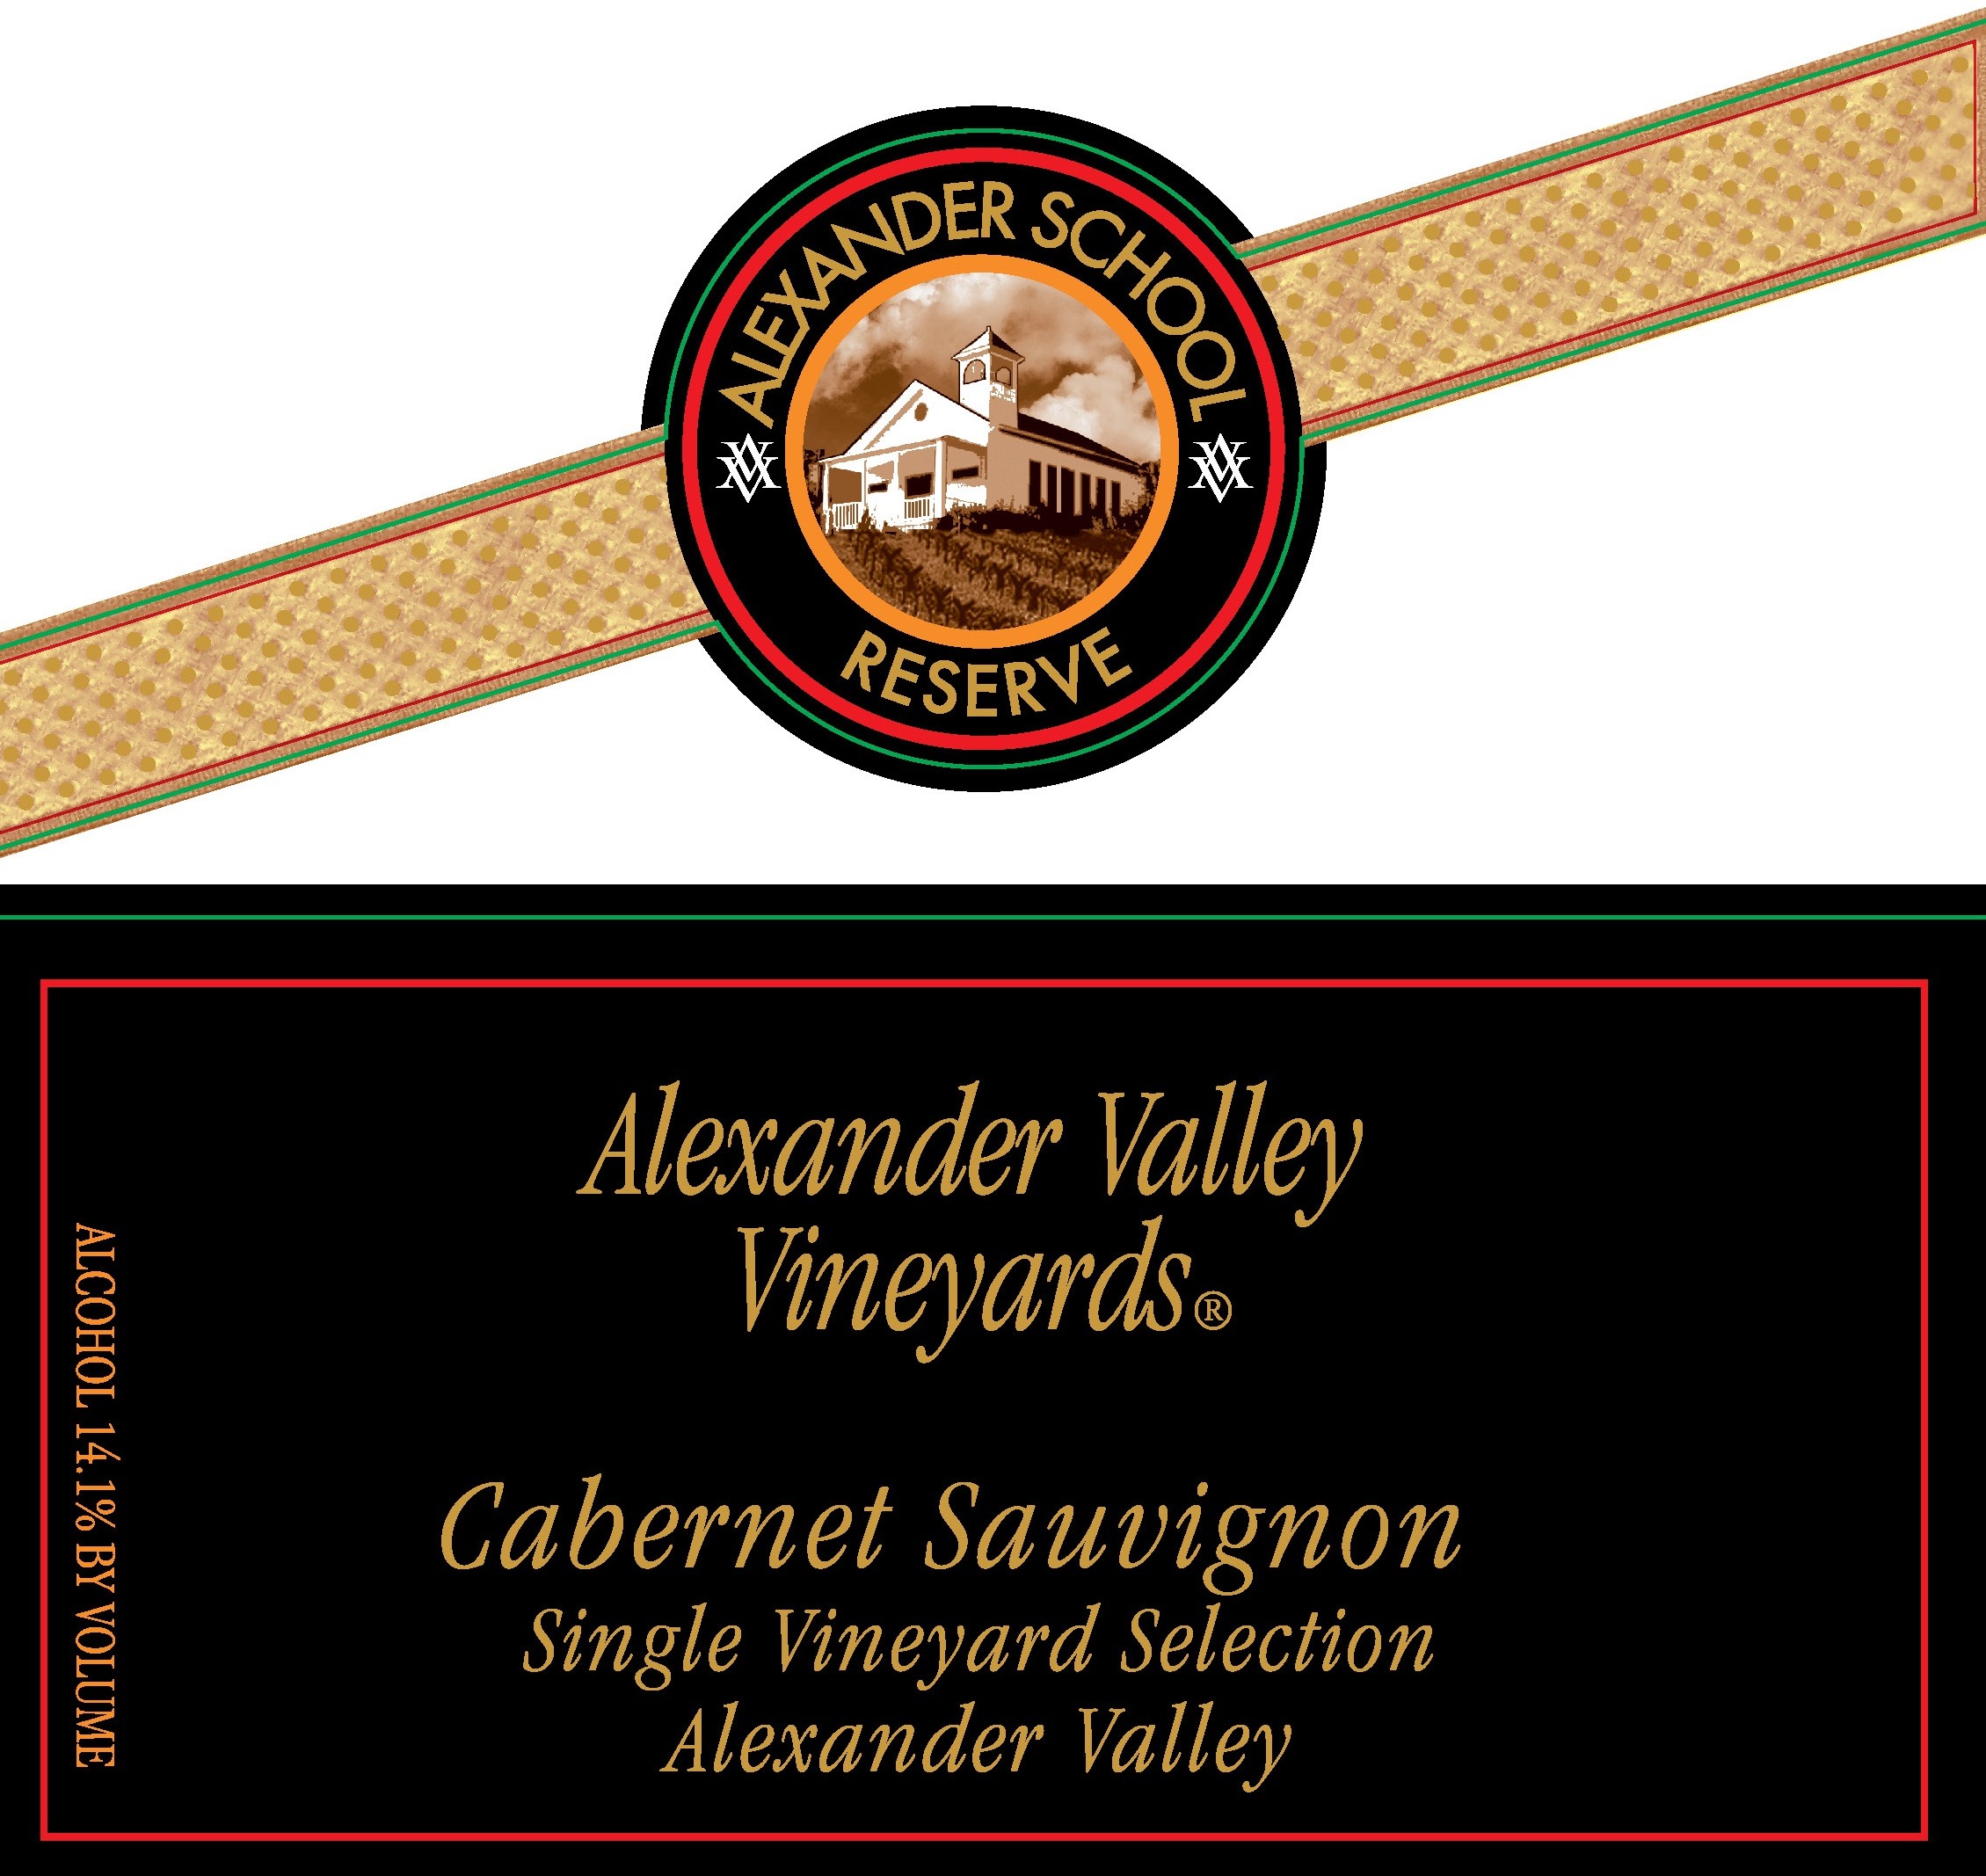 Alexander Valley - Cabernet Sauvignon - School Reserve label